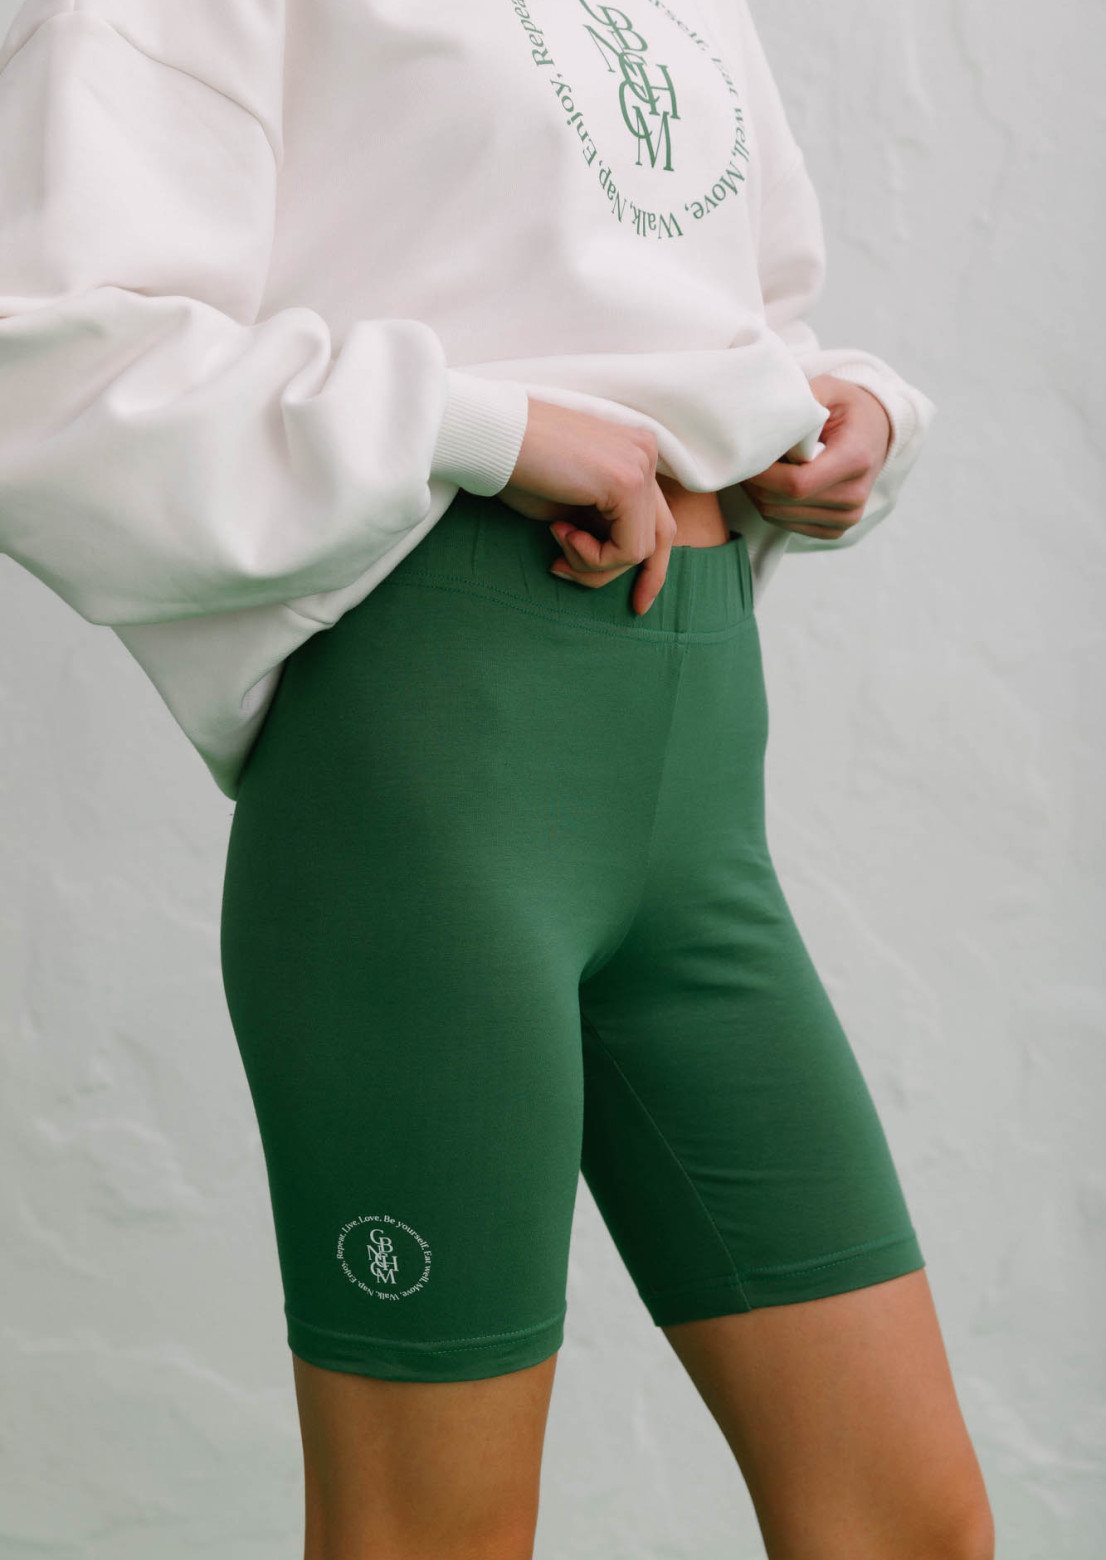 Green color cycling shorts with a circle print "CBNCHCM"